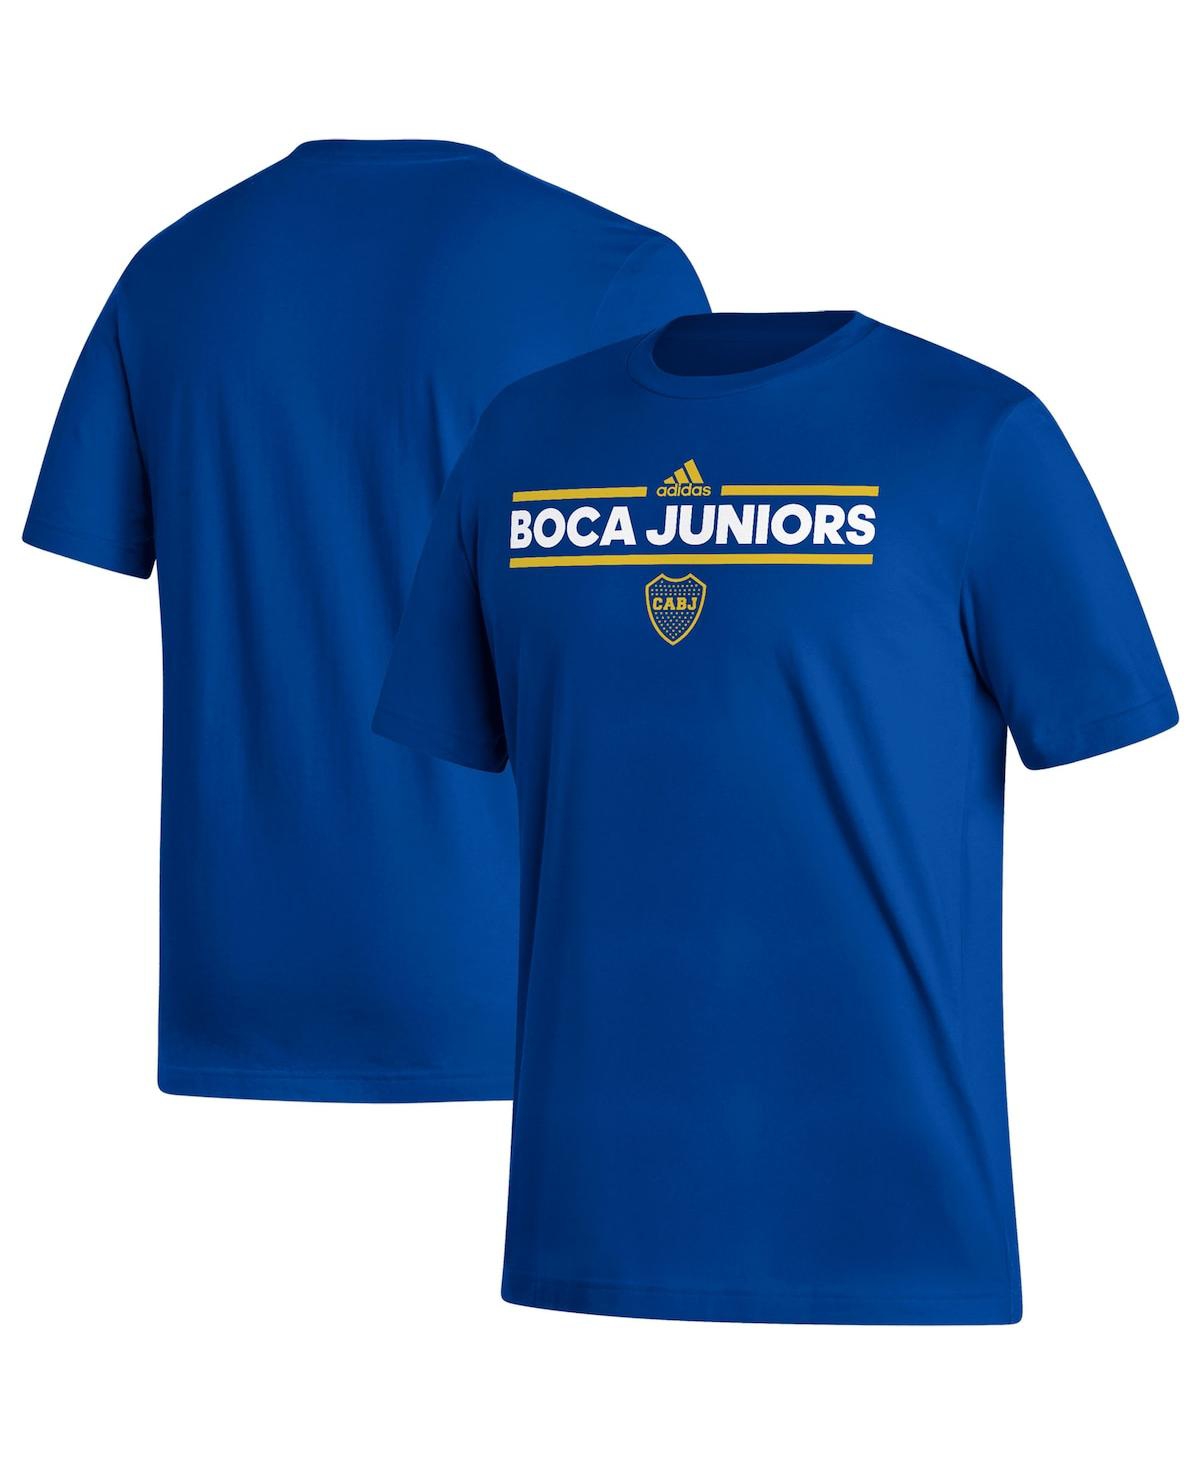 Adidas Originals Men's Blue Boca Juniors Dassler T-shirt